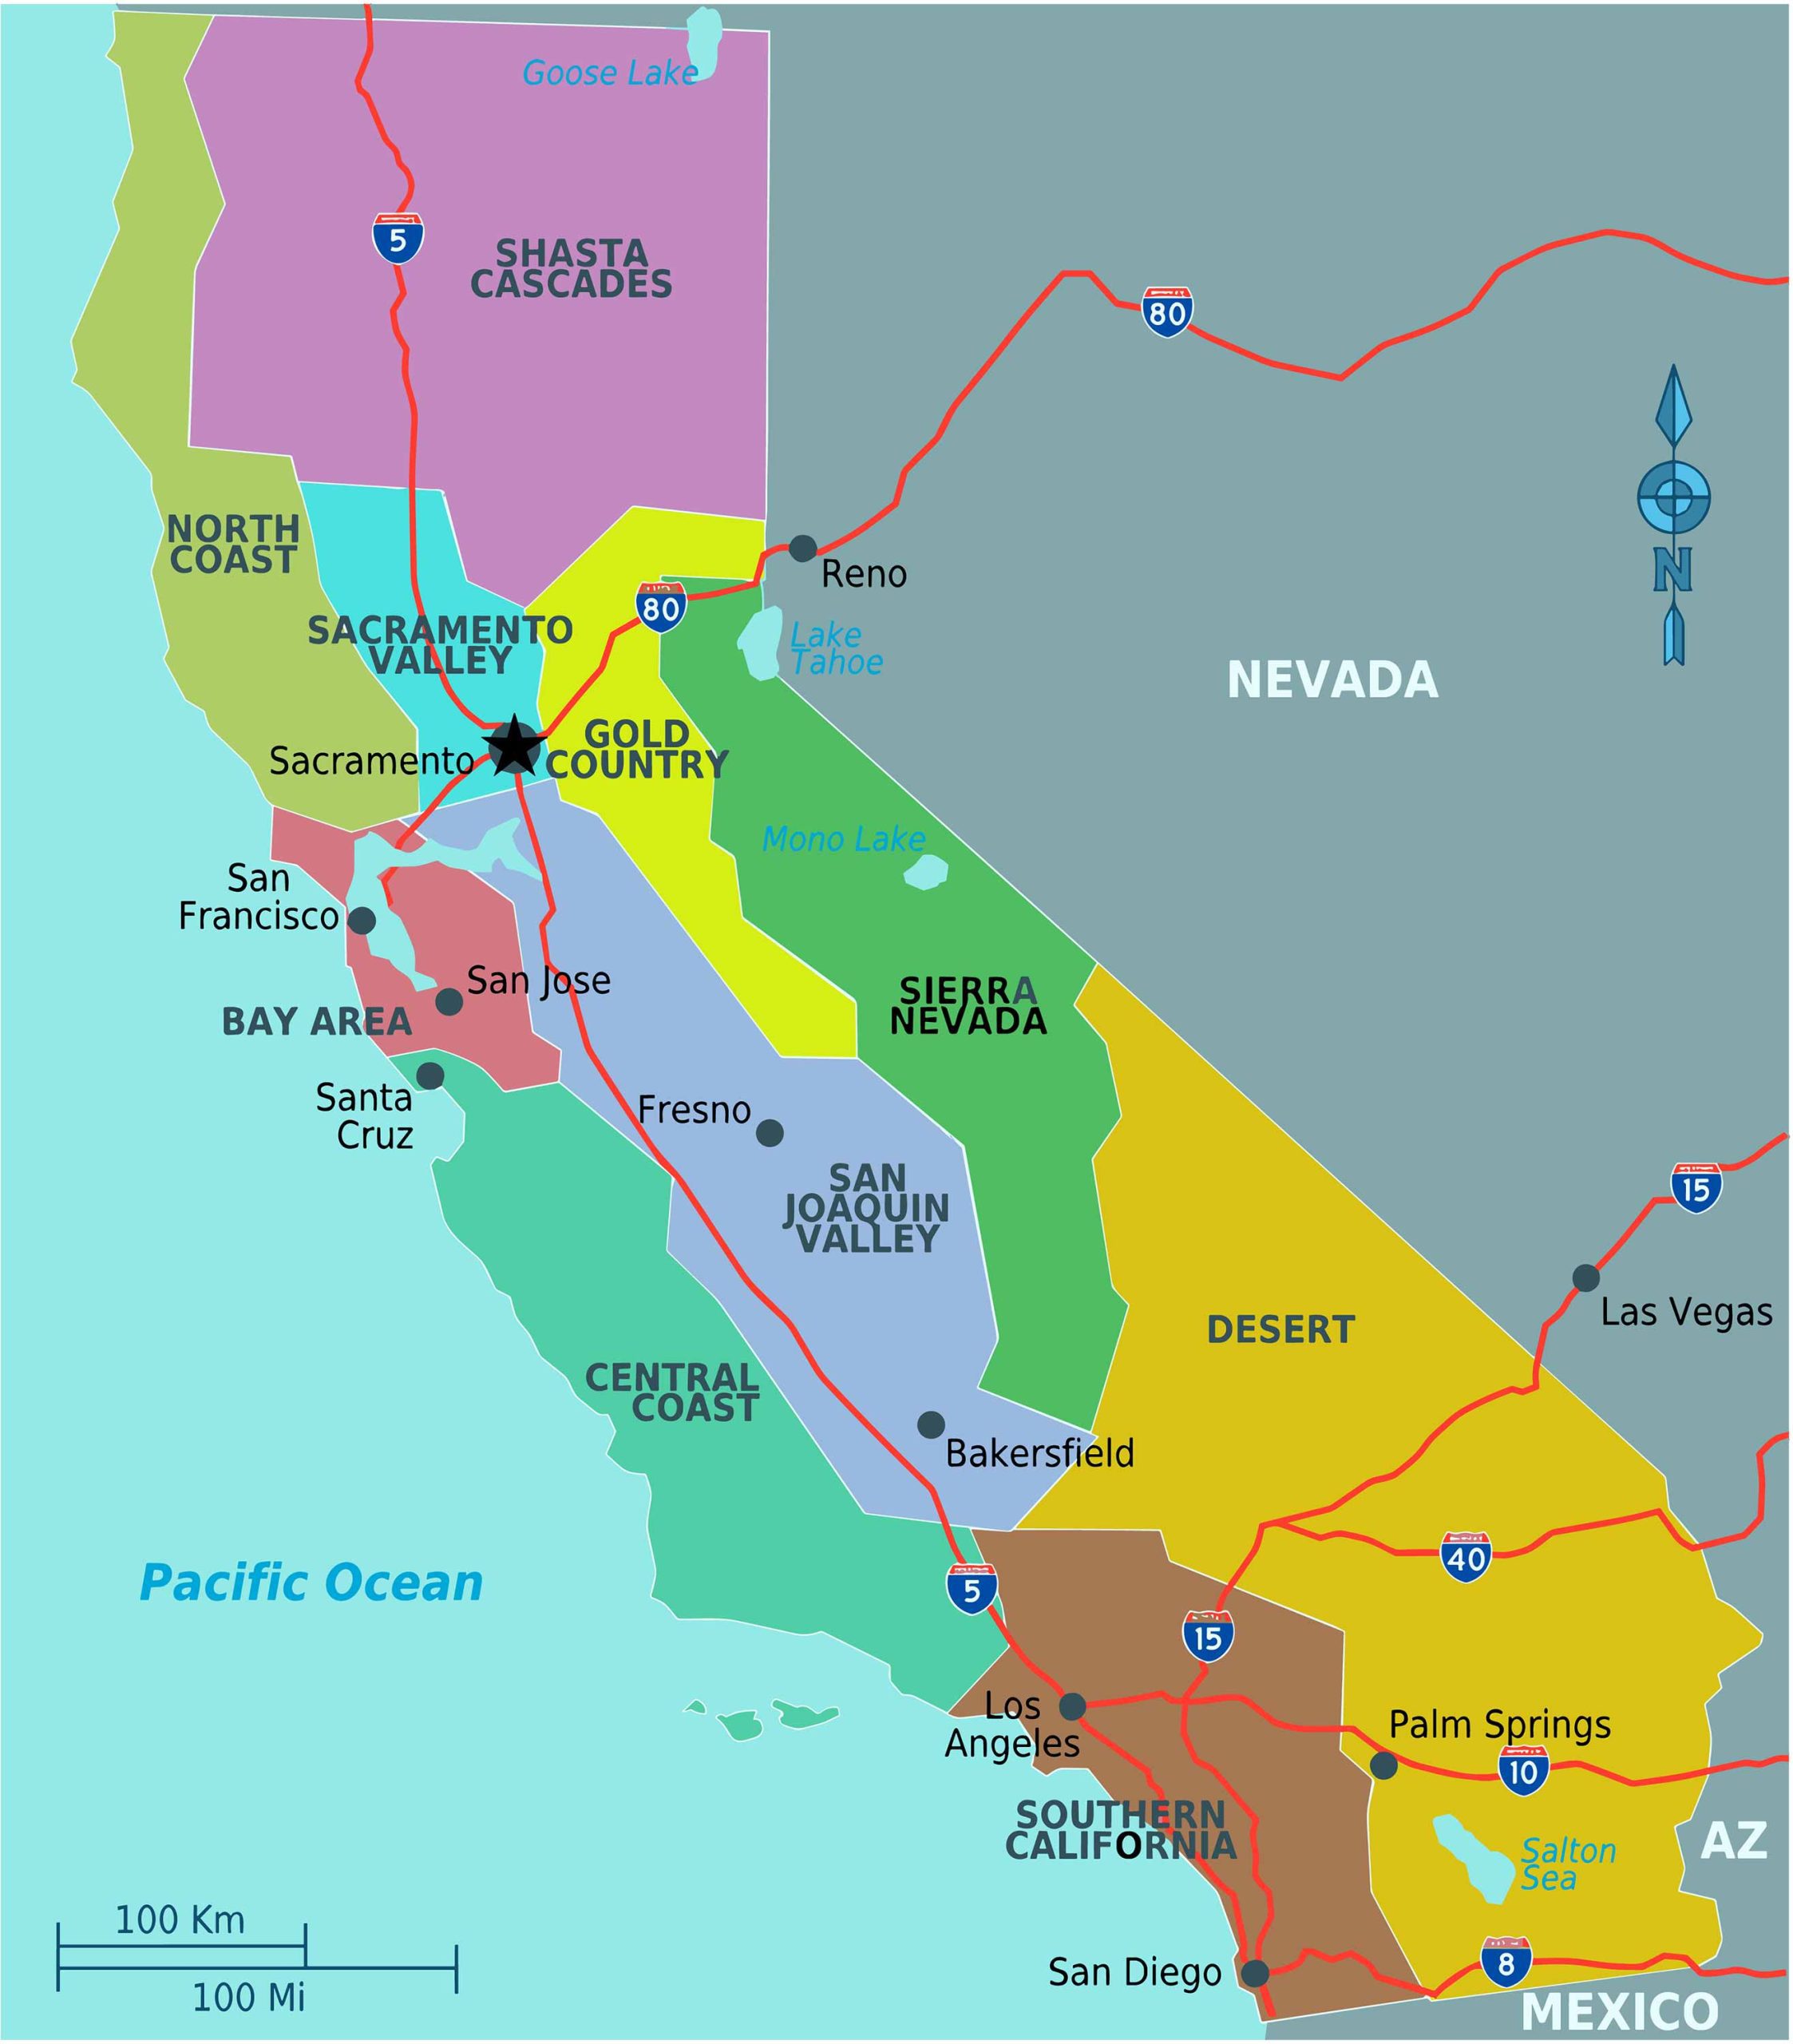 California Regions Map